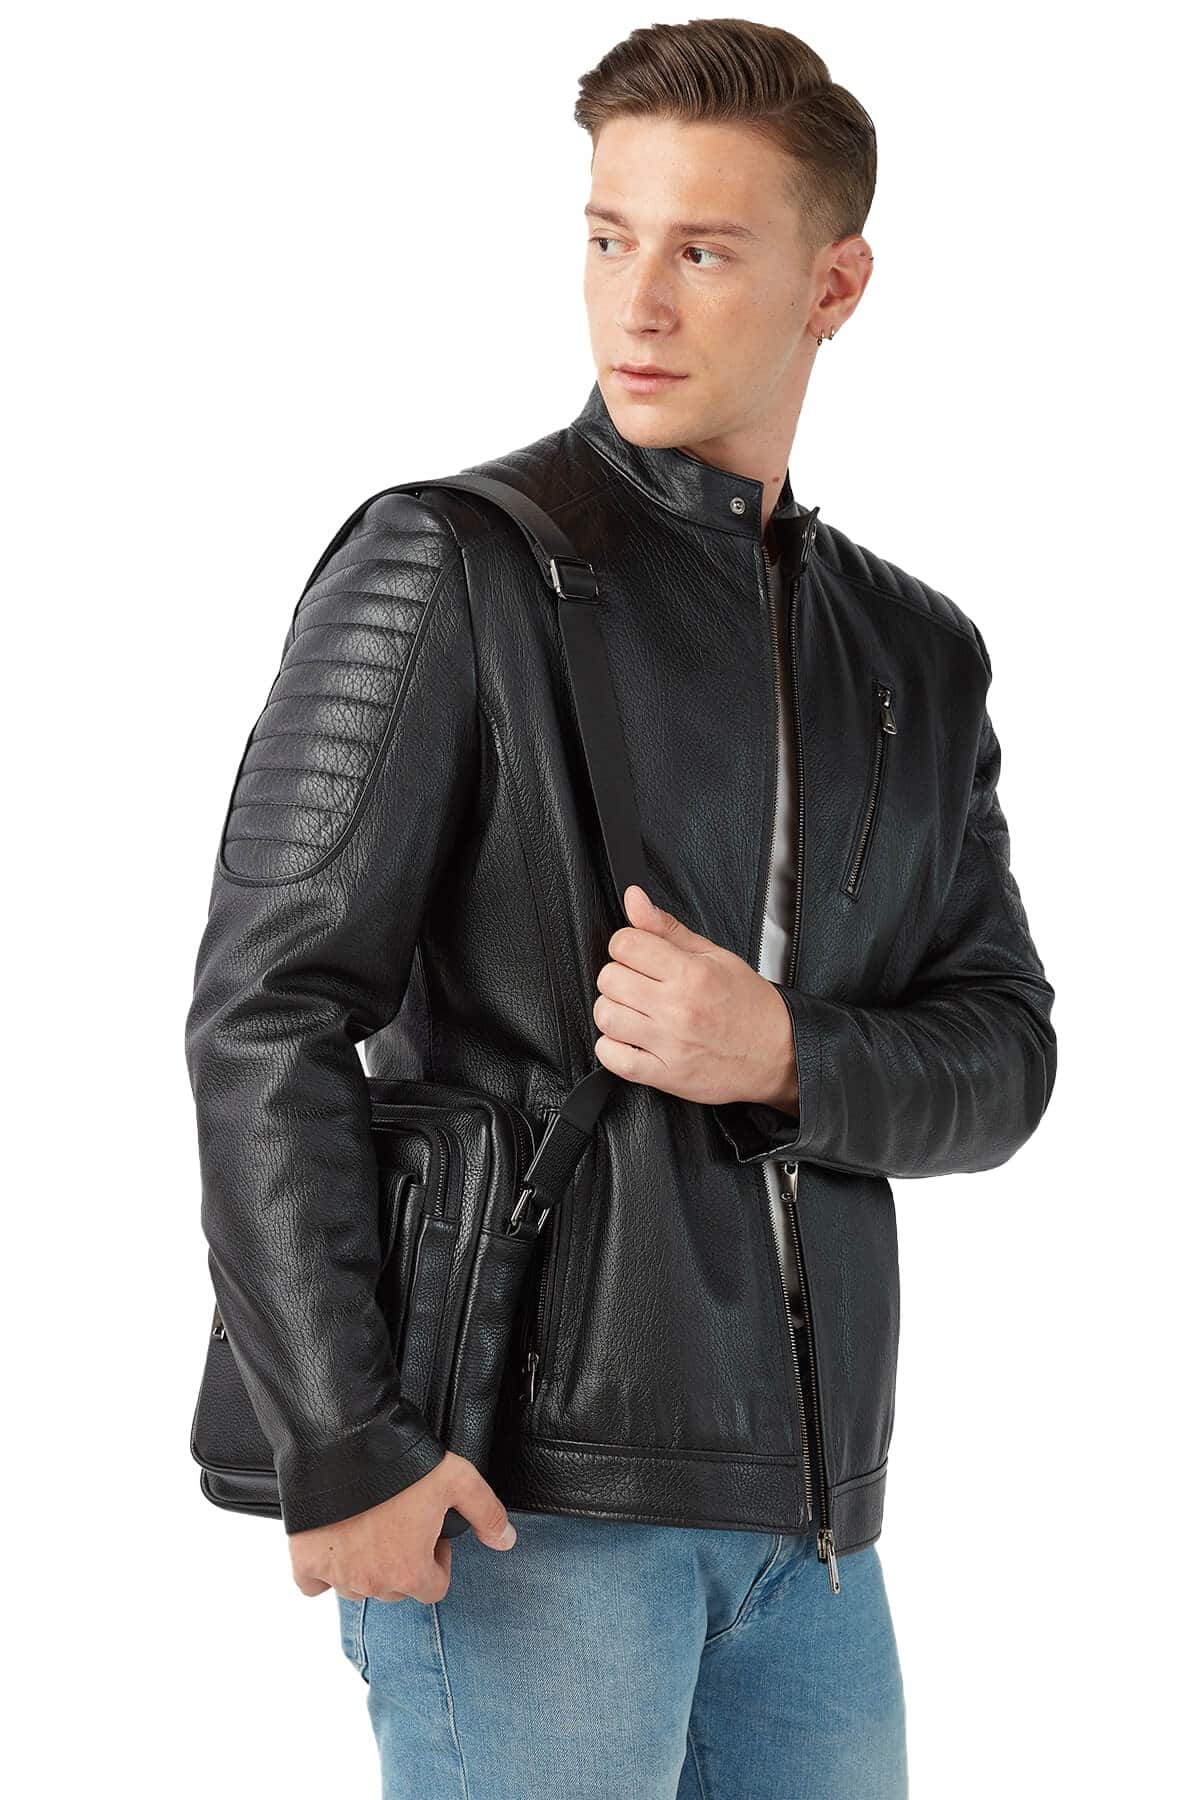 Luigi Men's 100 % Real Black Leather Jumbo Jacket